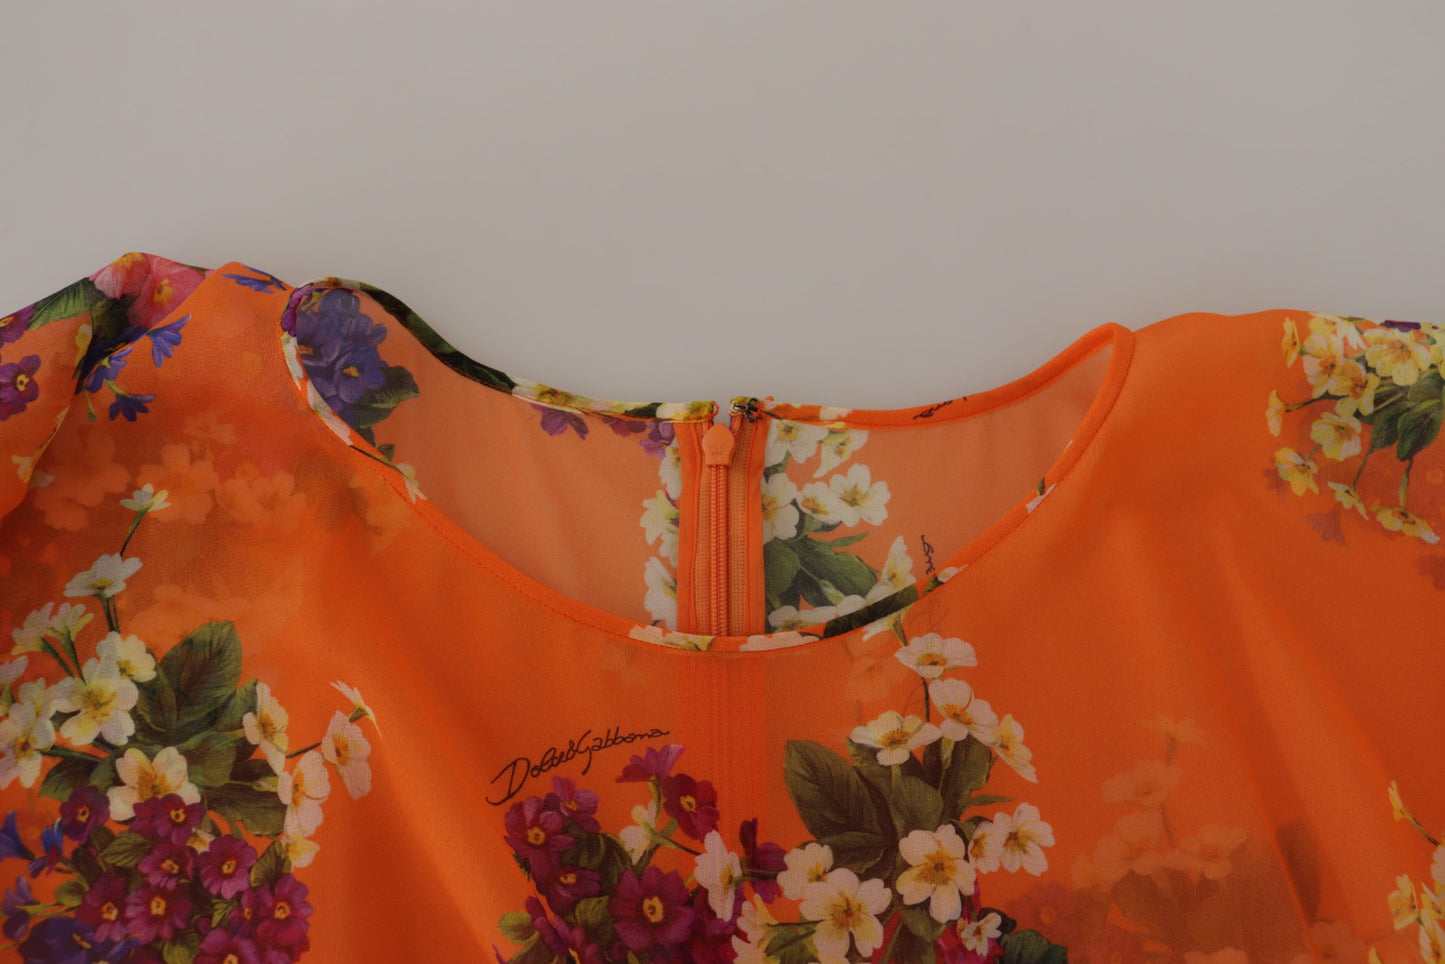 Elegant Floral Silk Blouse with Back Zipper